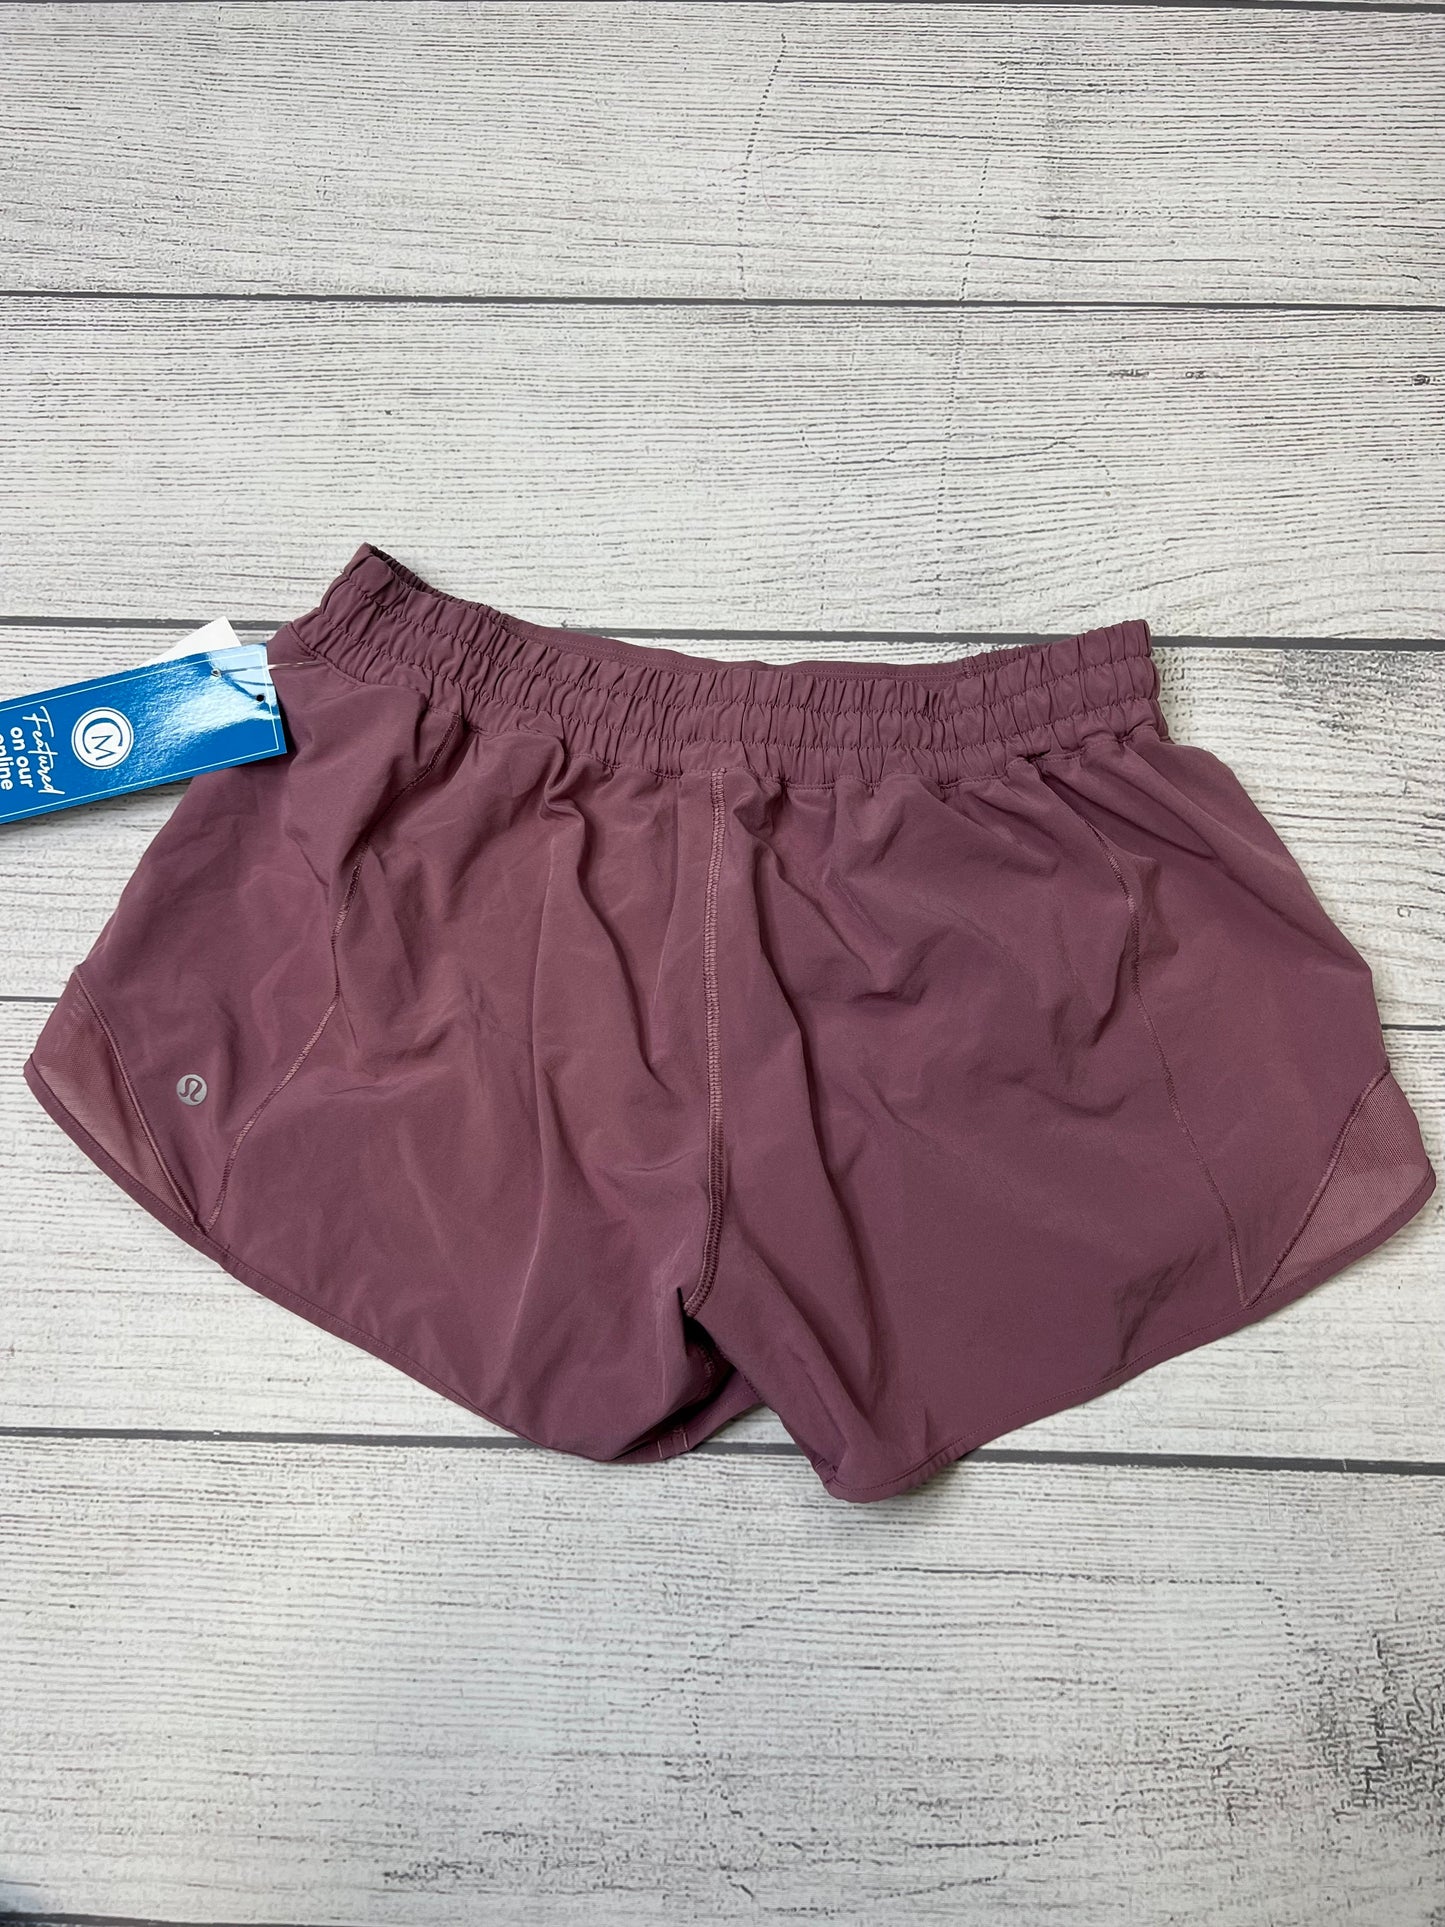 Athletic Shorts By Lululemon  Size: 12tall